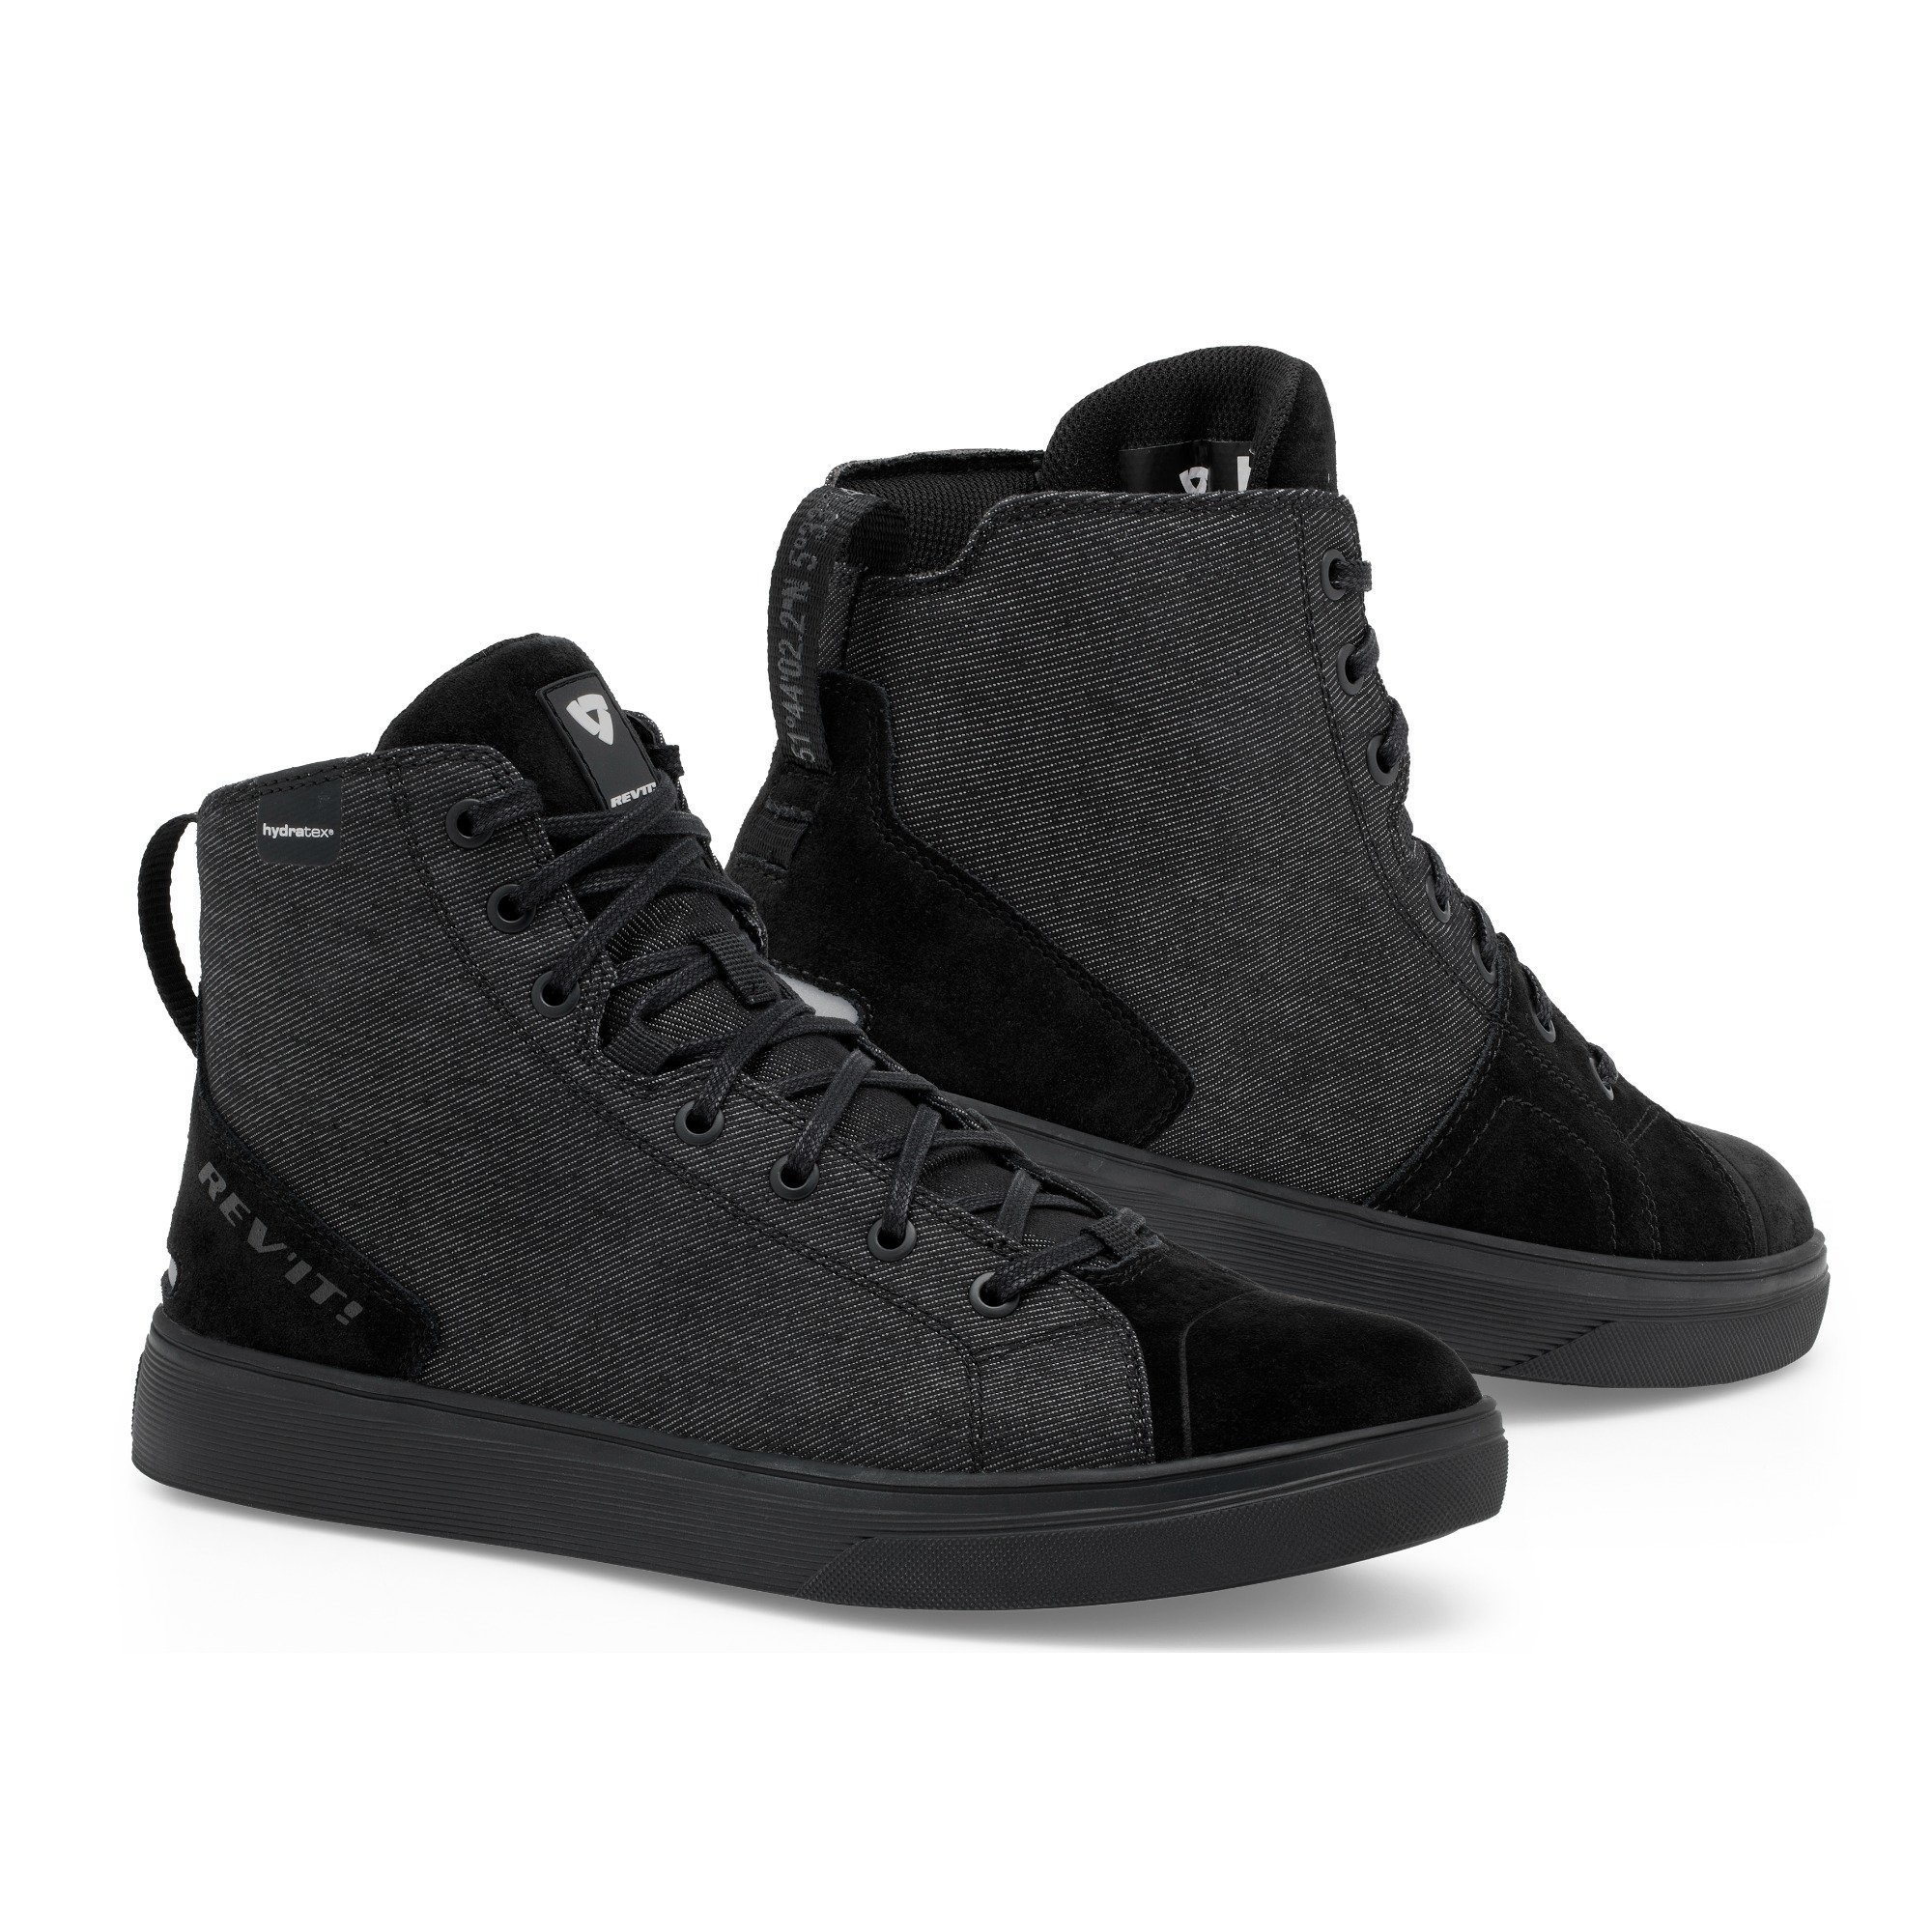 Image of REV'IT! Delta H2O Shoes Black Size 40 EN